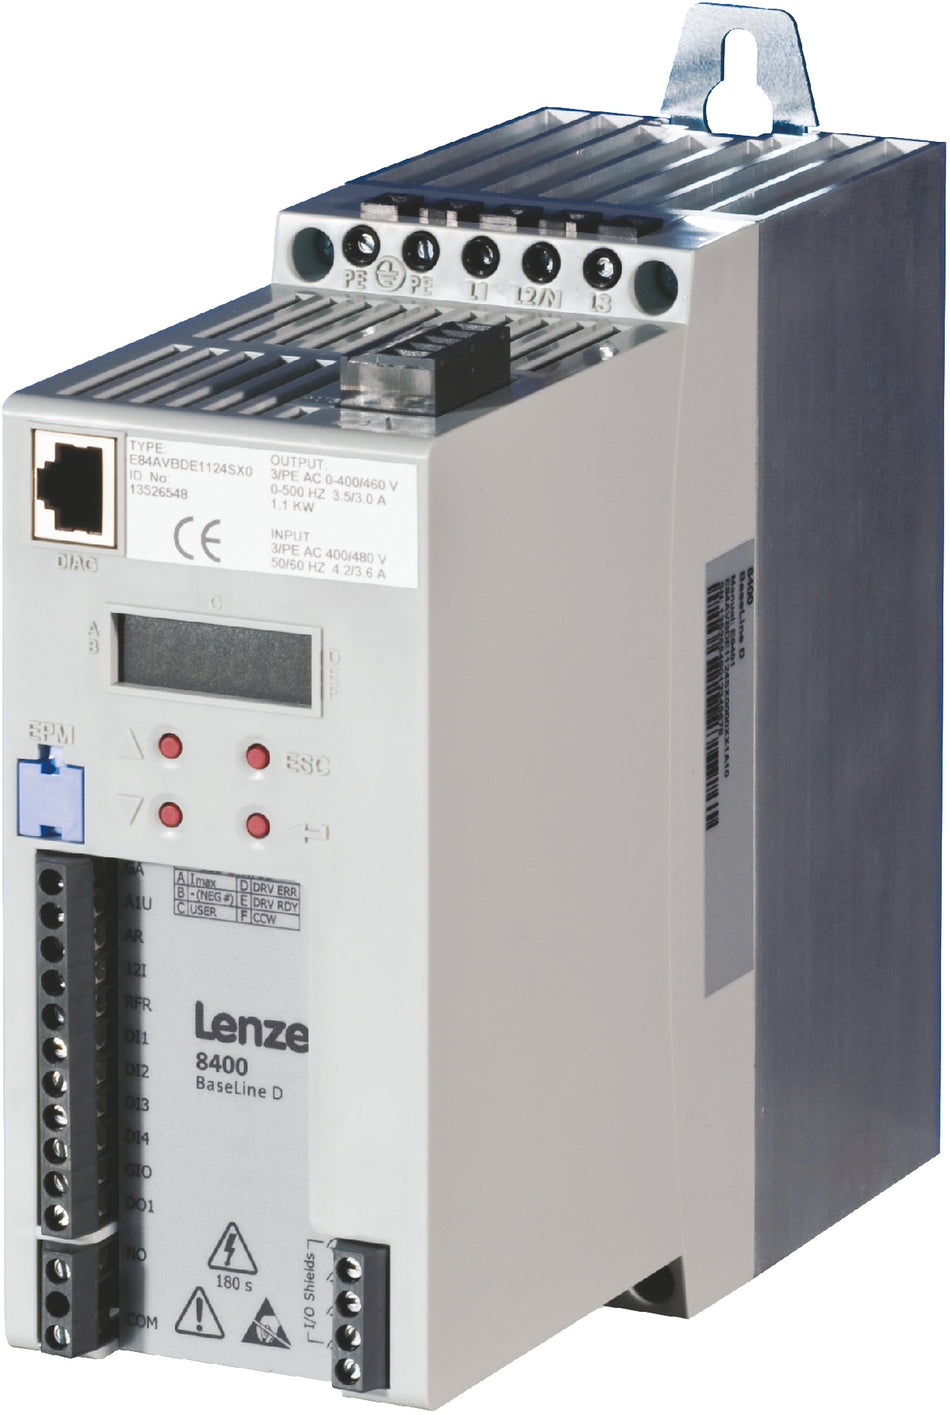 Lenze Inverter Drives 8400 BaseLine -    E84AVBCE1124SX0XX3A34 1.1 kW